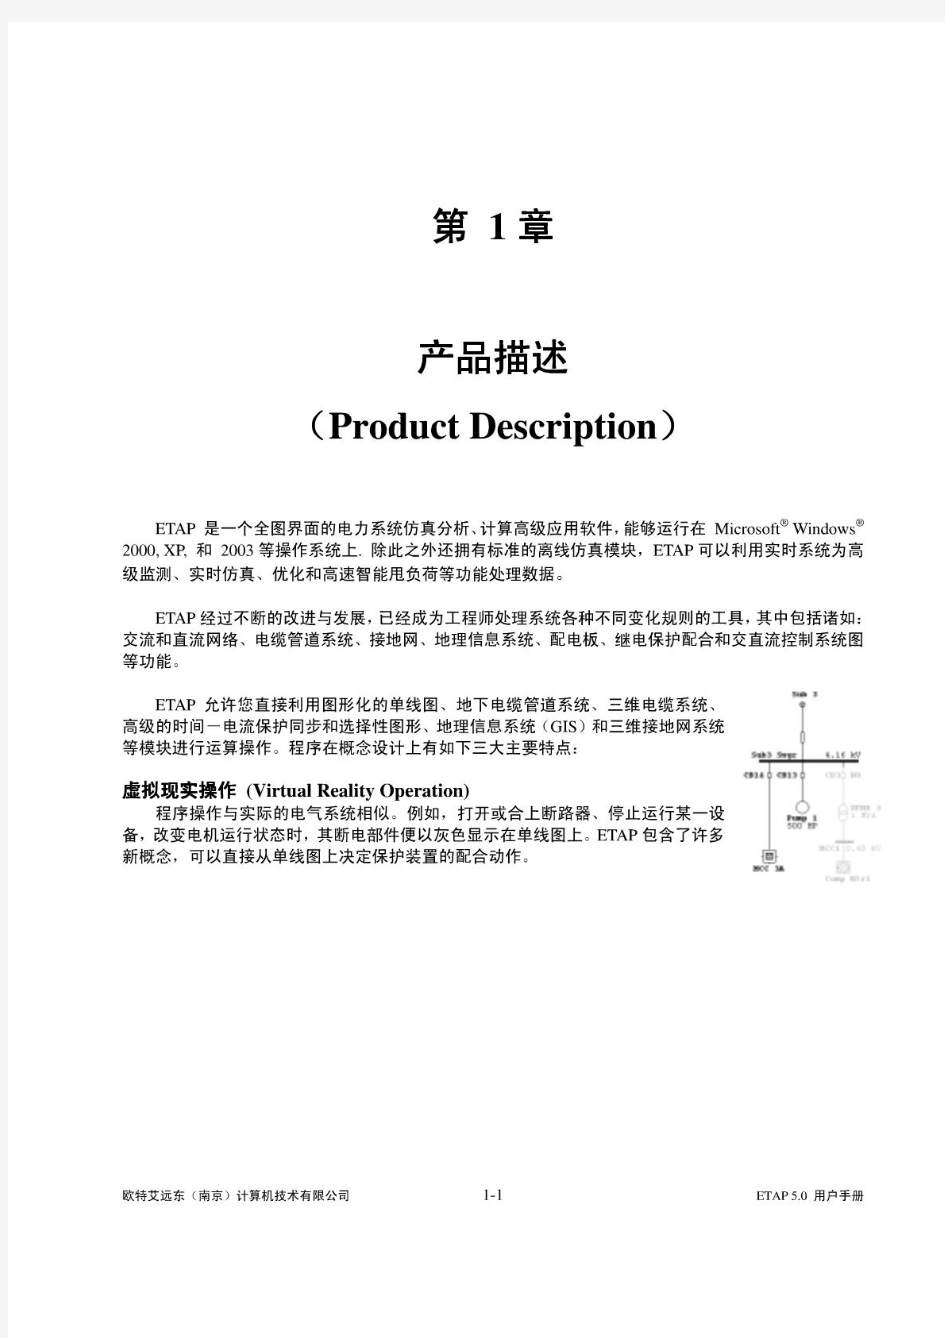 etap5.0中文手册Ch01 产品描述